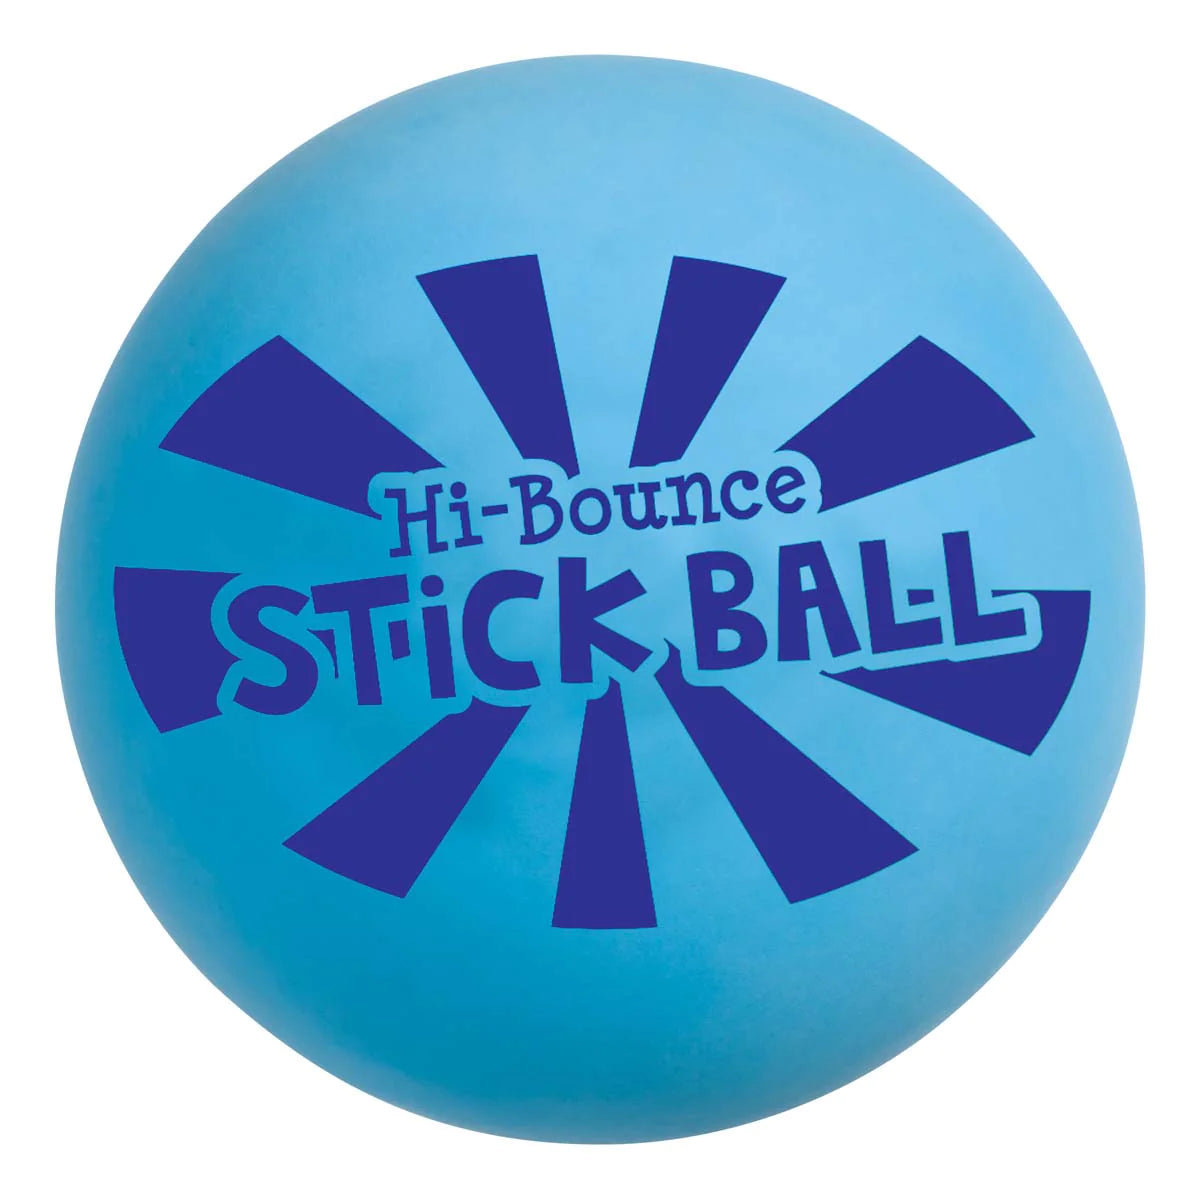 HI BOUNCE STICK BALL